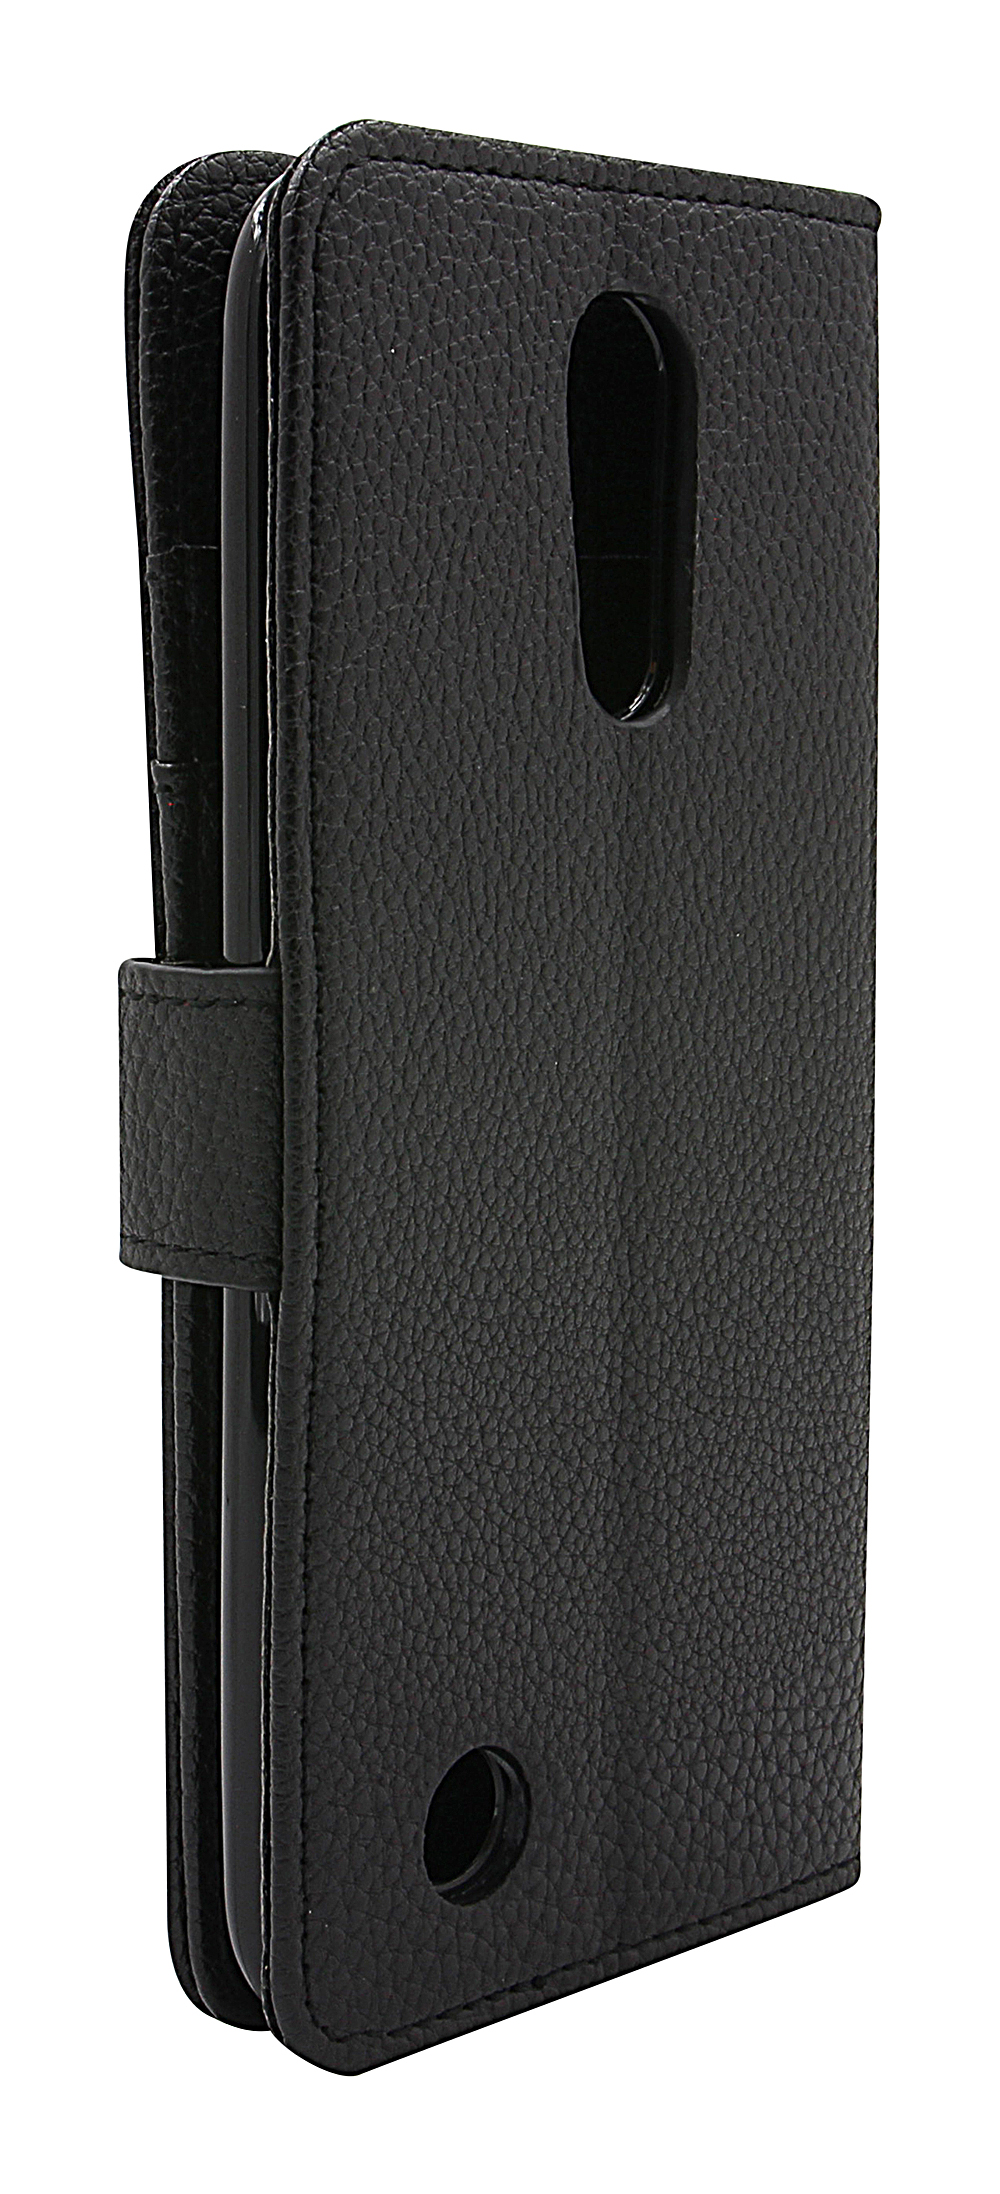 New Standcase Wallet LG K10 2017 (M250N)